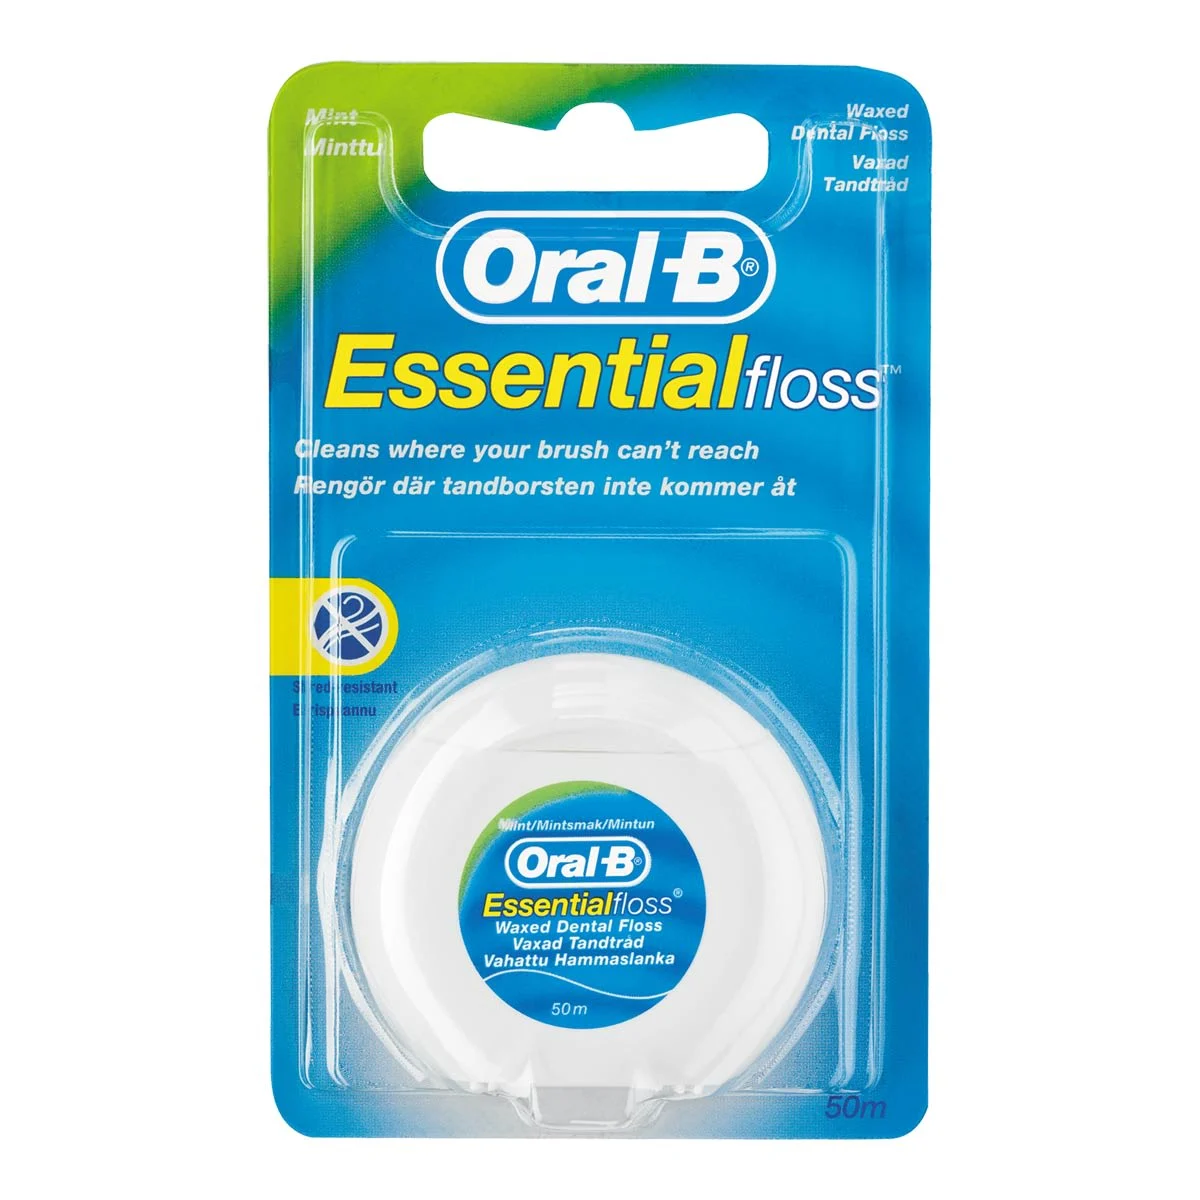 Oral-B Essential tanntråd mint 